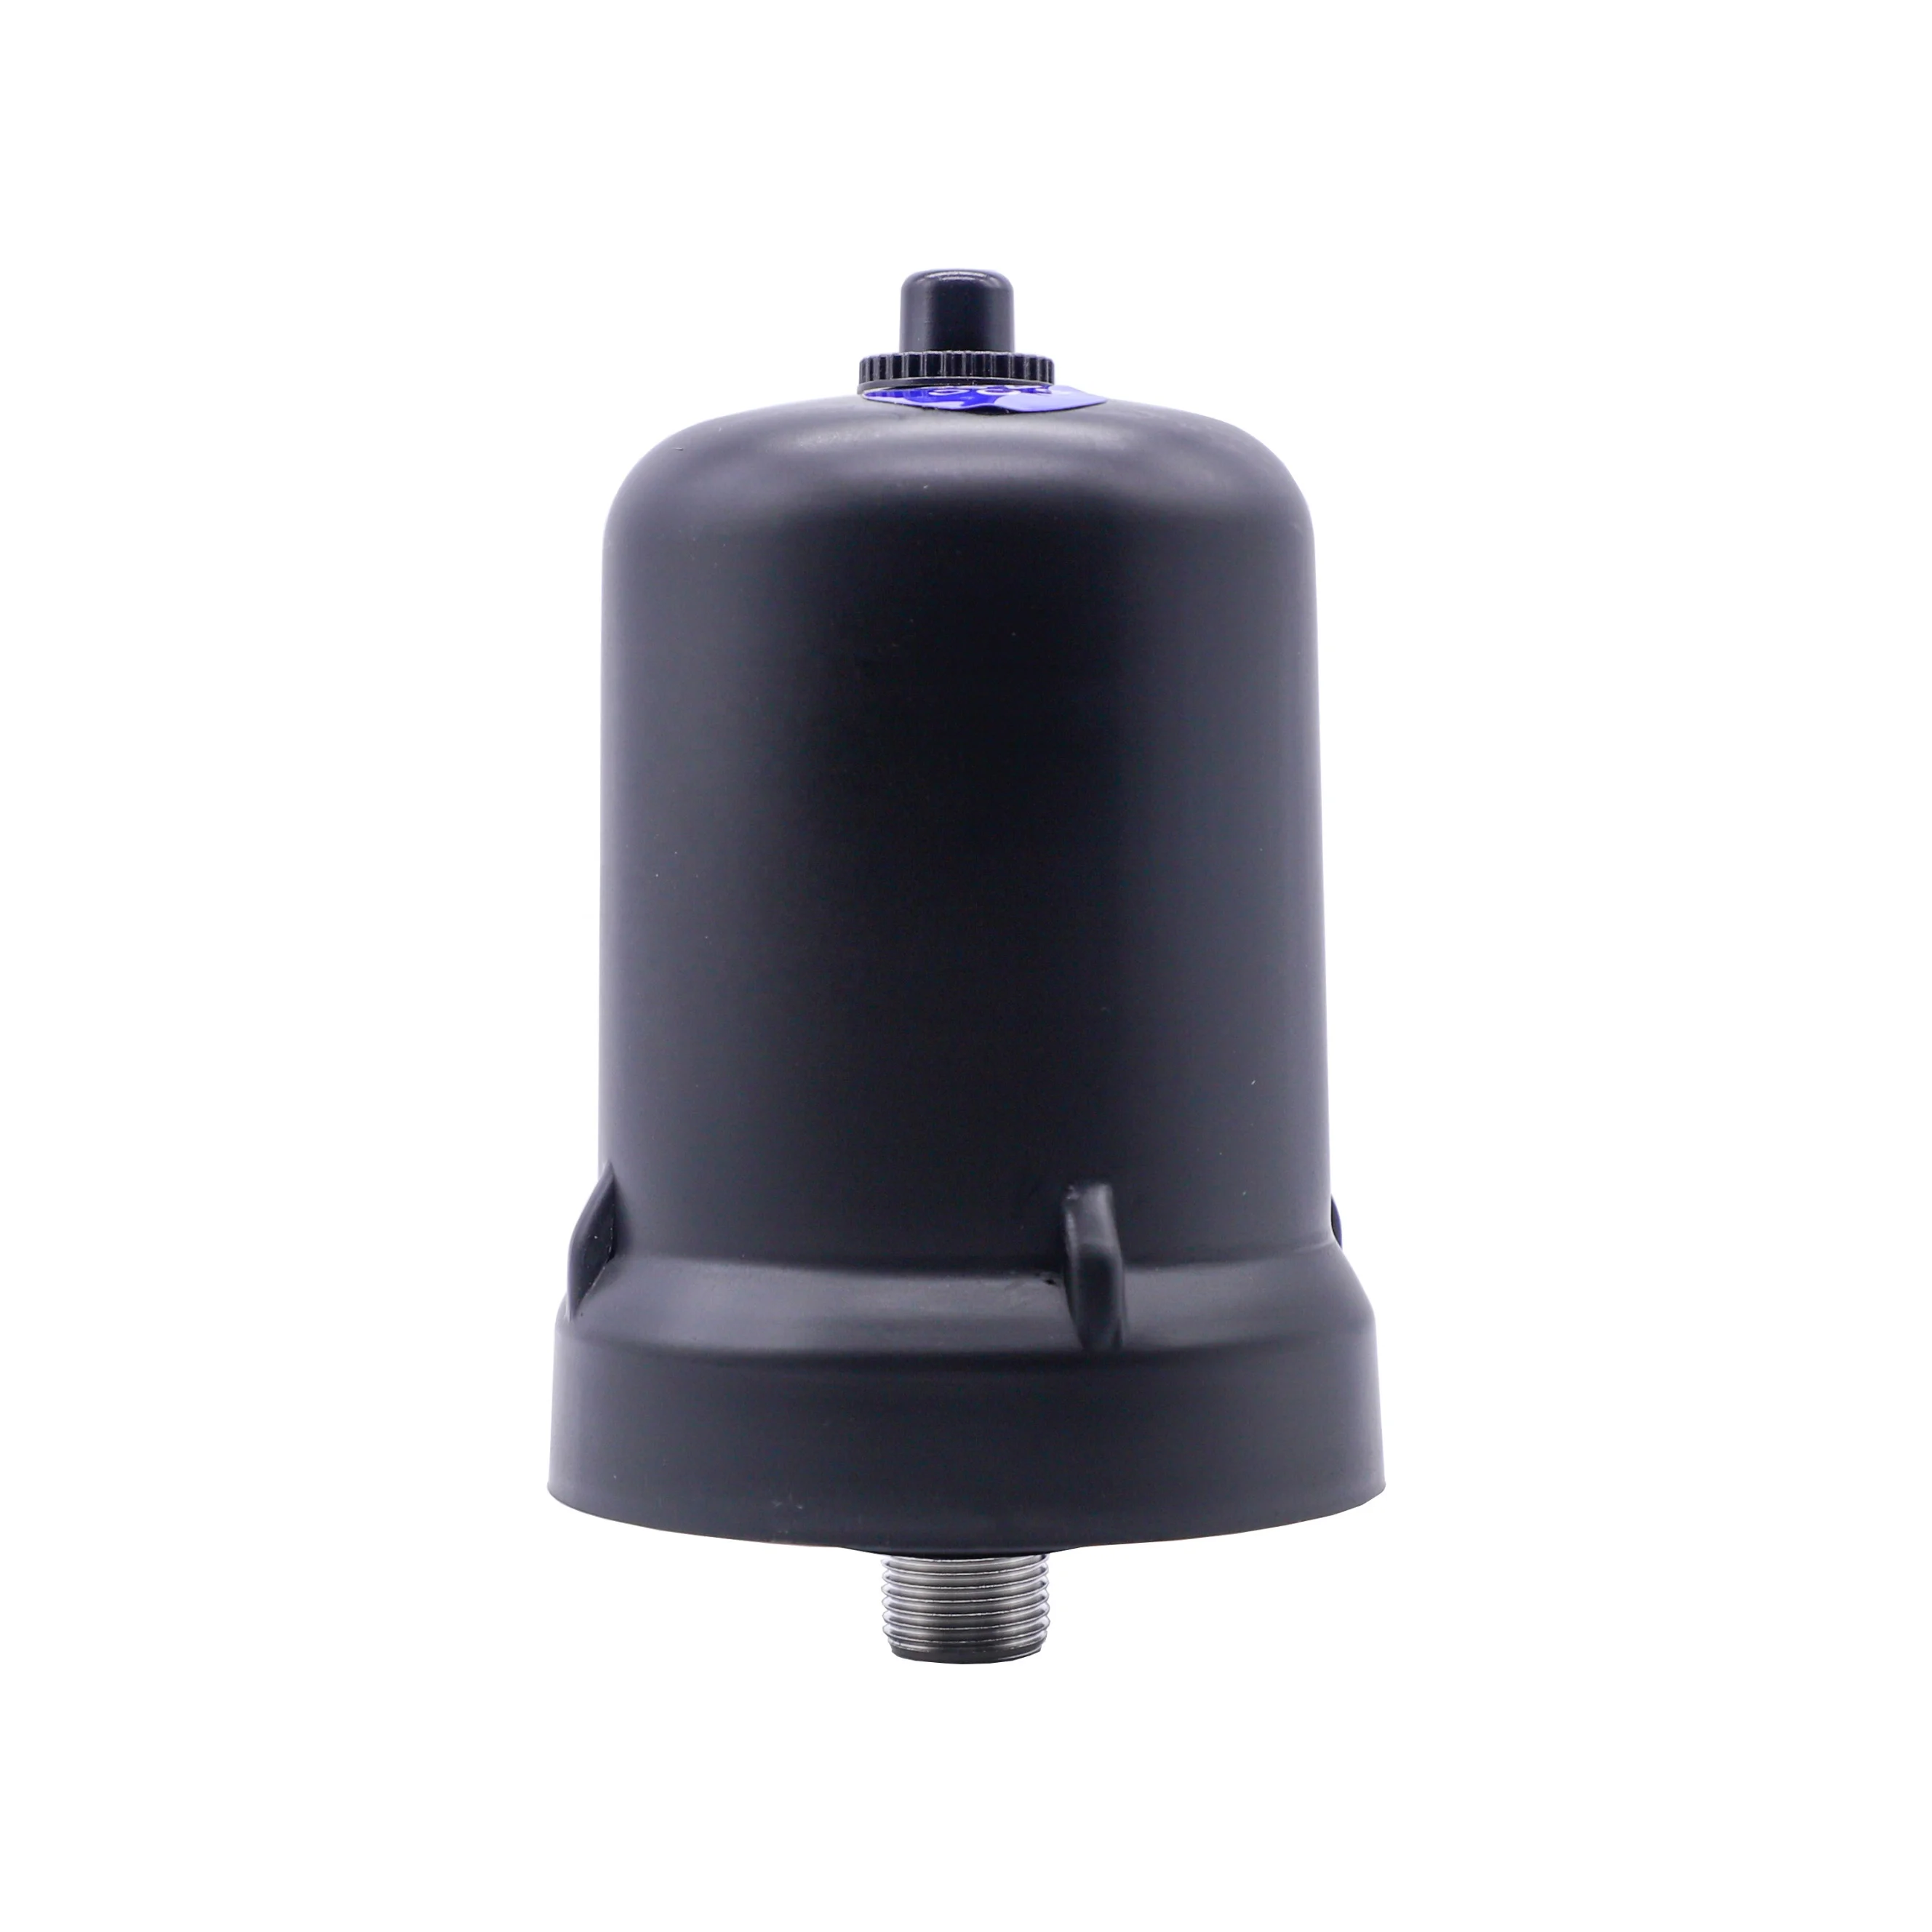 0.5L water tank, Pressure diaphragm tank for water pump, balance pressure